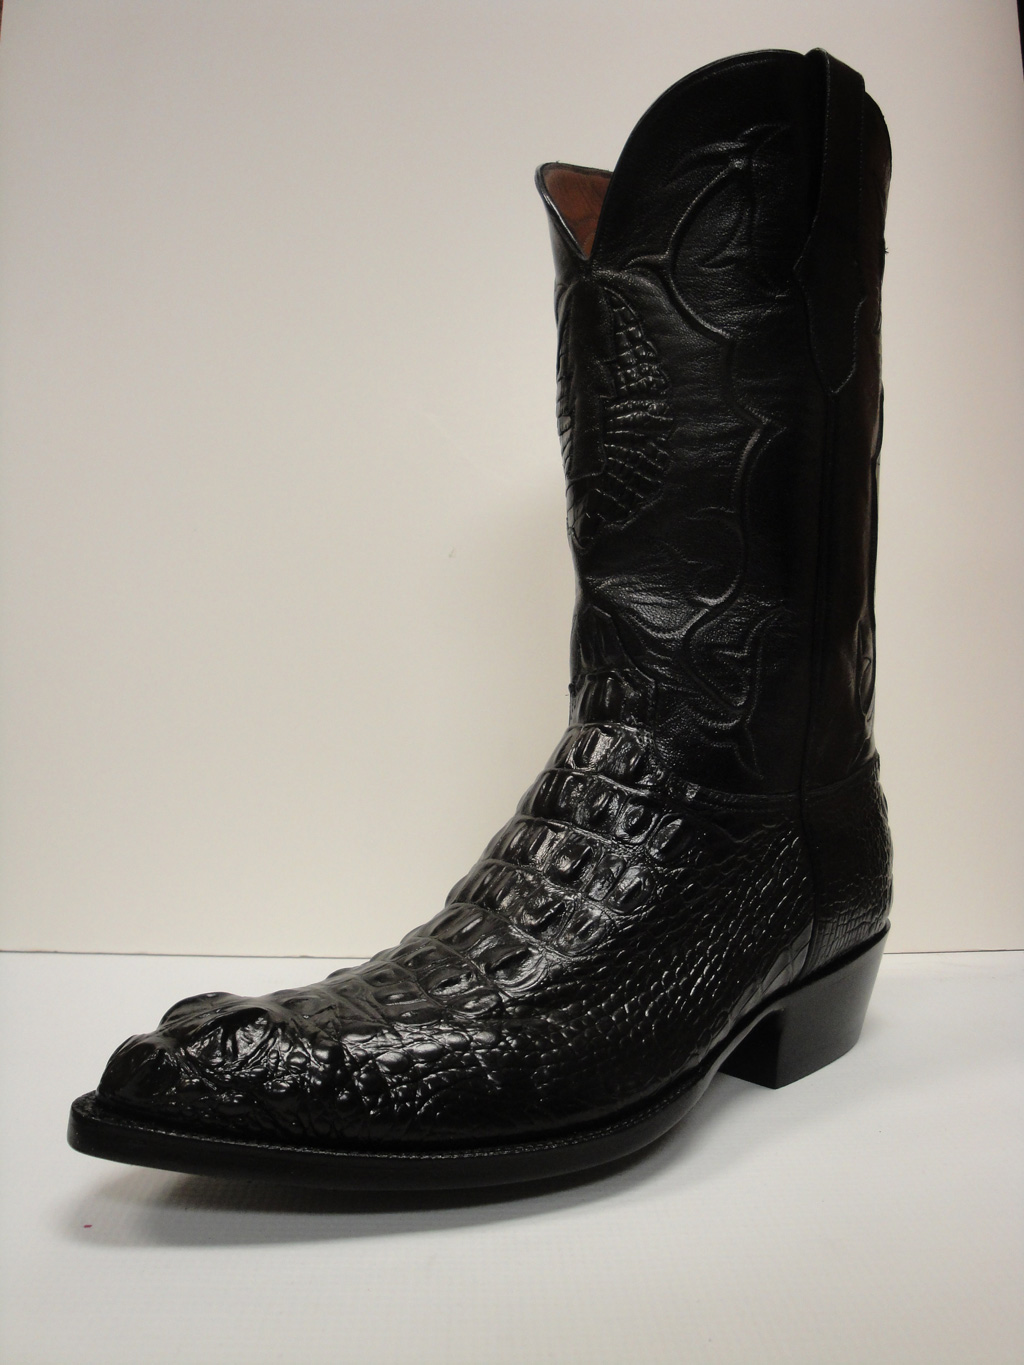 black gator skin boots